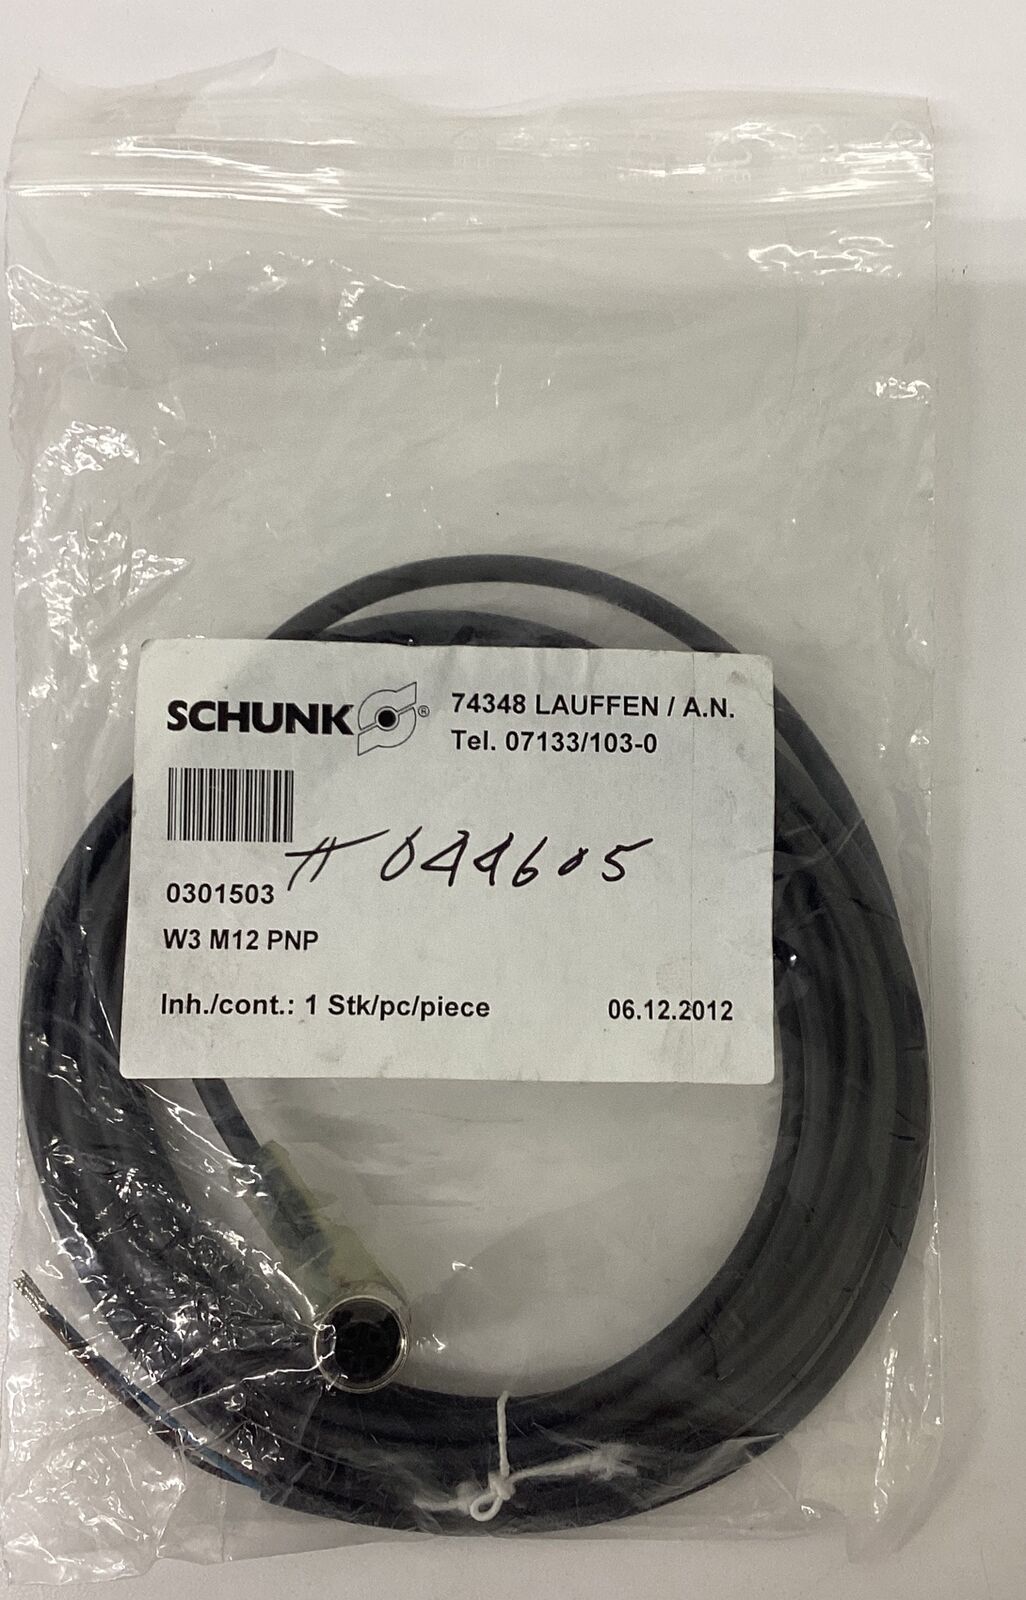 Schunk 0301503 Sensor Cable W3 M12 Pnp (GR210) - 0